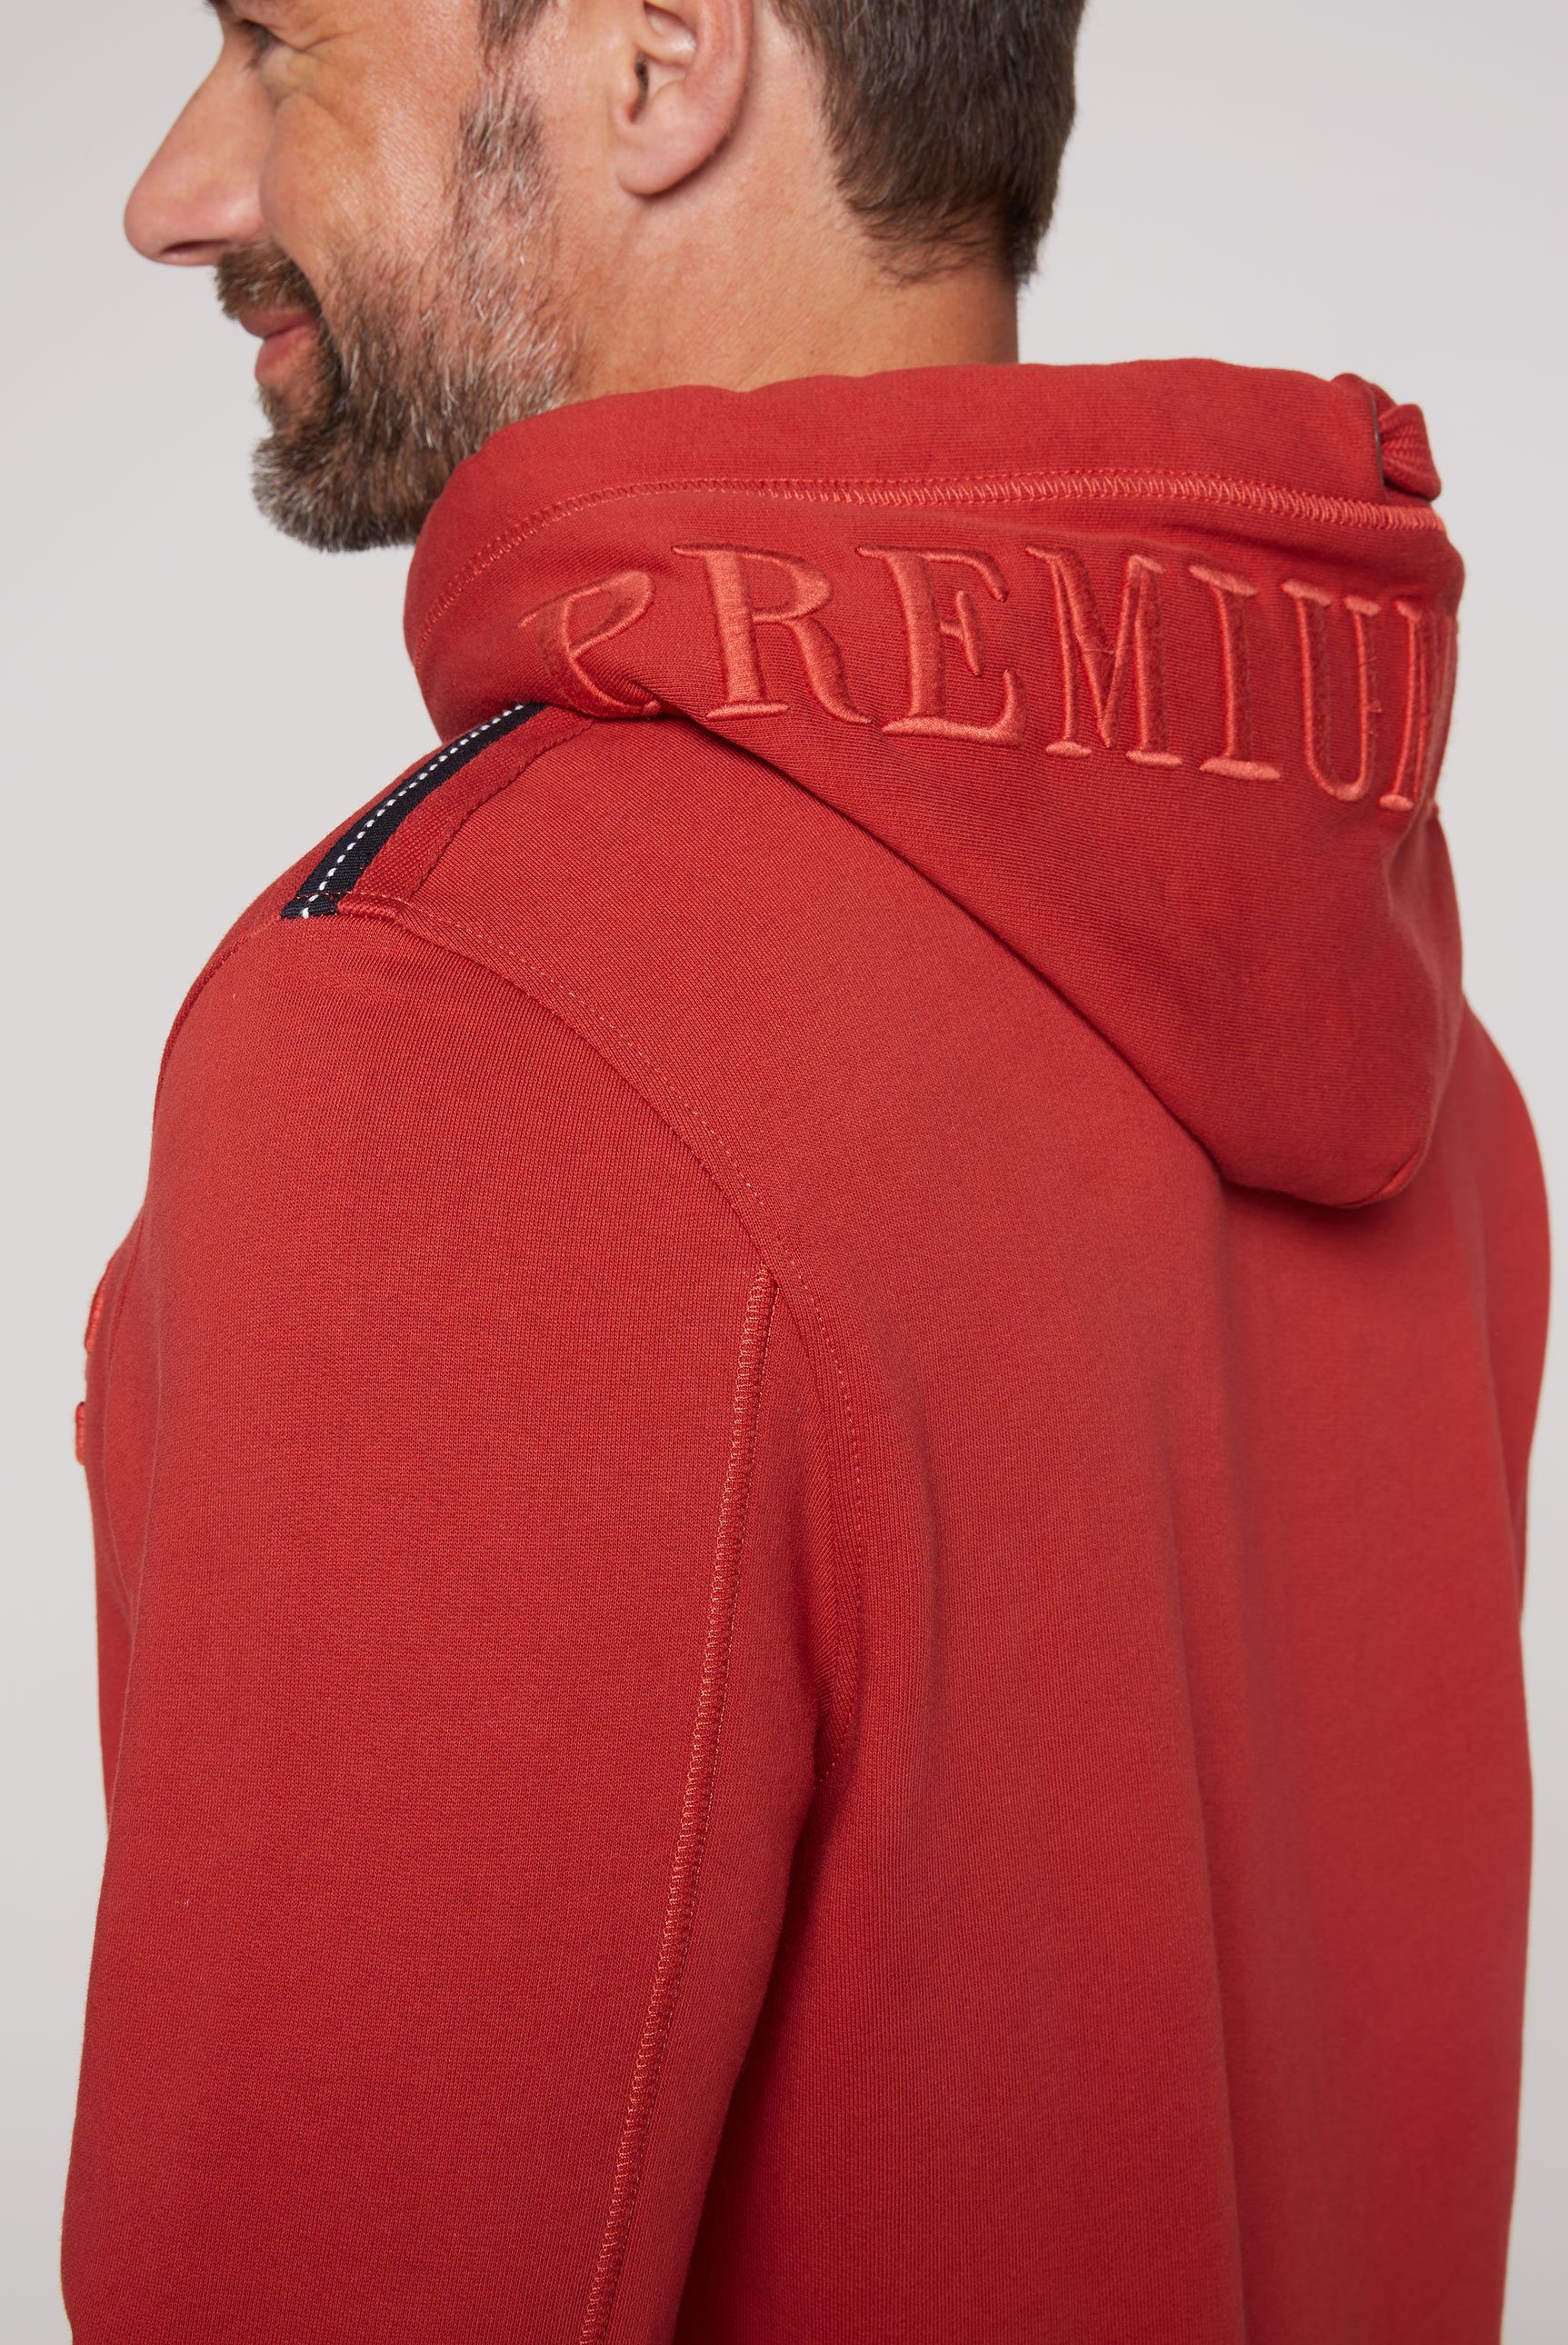 DAVID Logostickereien CAMP Kapuzensweatshirt vintage red mit